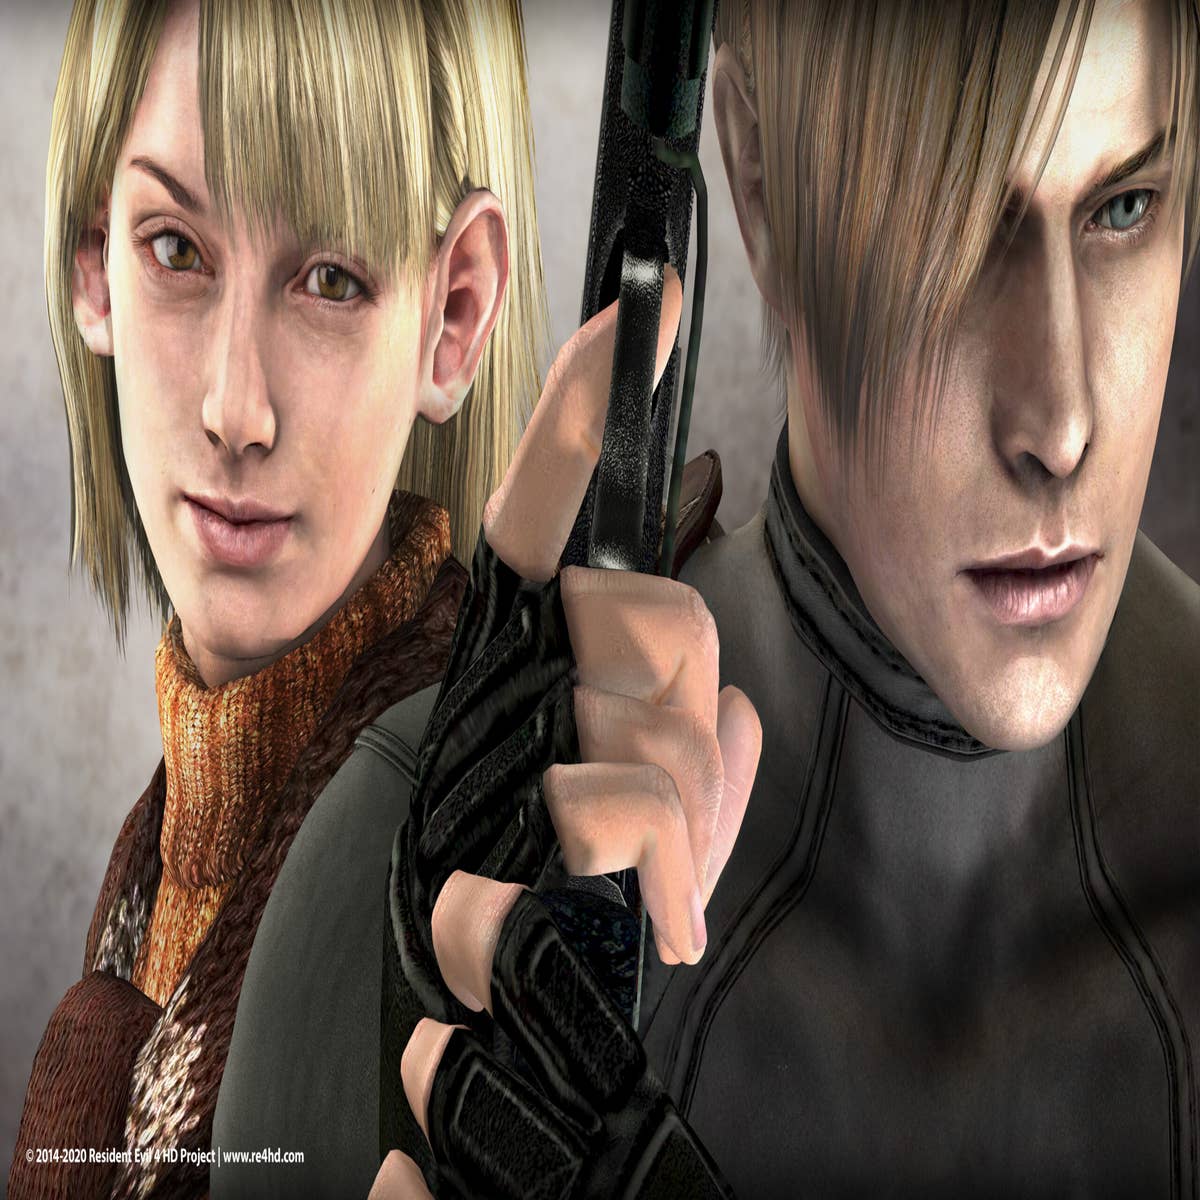 Mod The Sims - Resident Evil 4